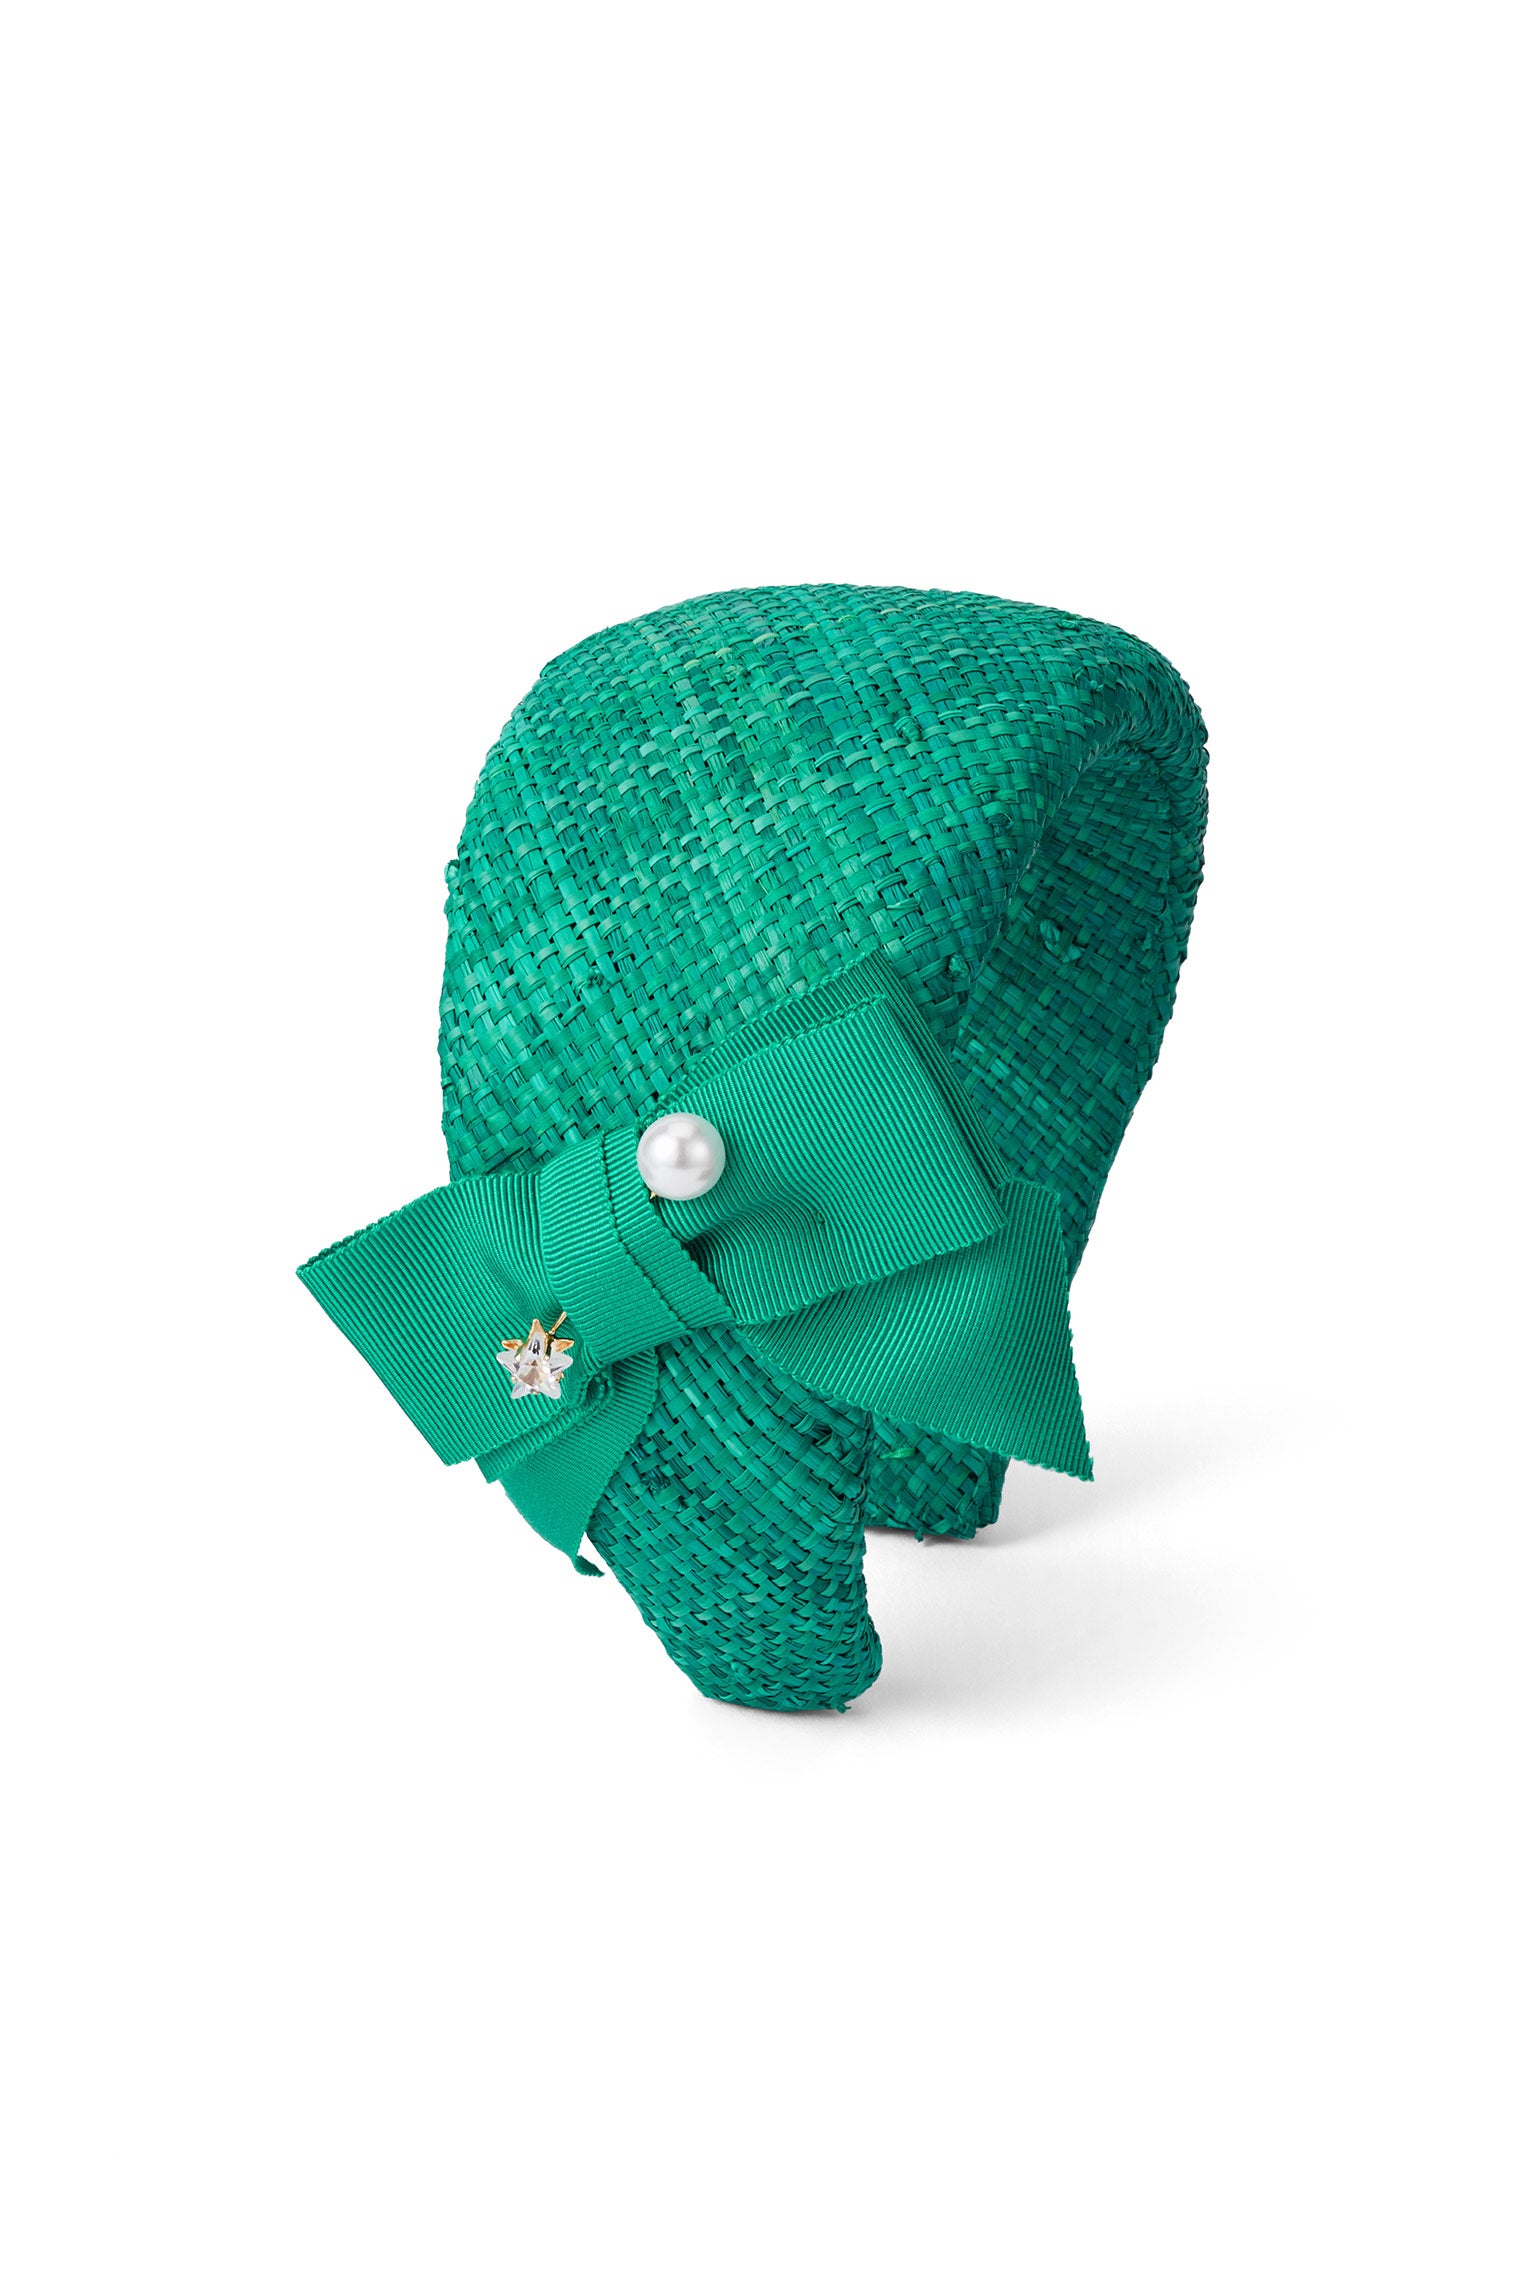 Tanami Headband - New Season Women's Hats - Lock & Co. Hatters London UK